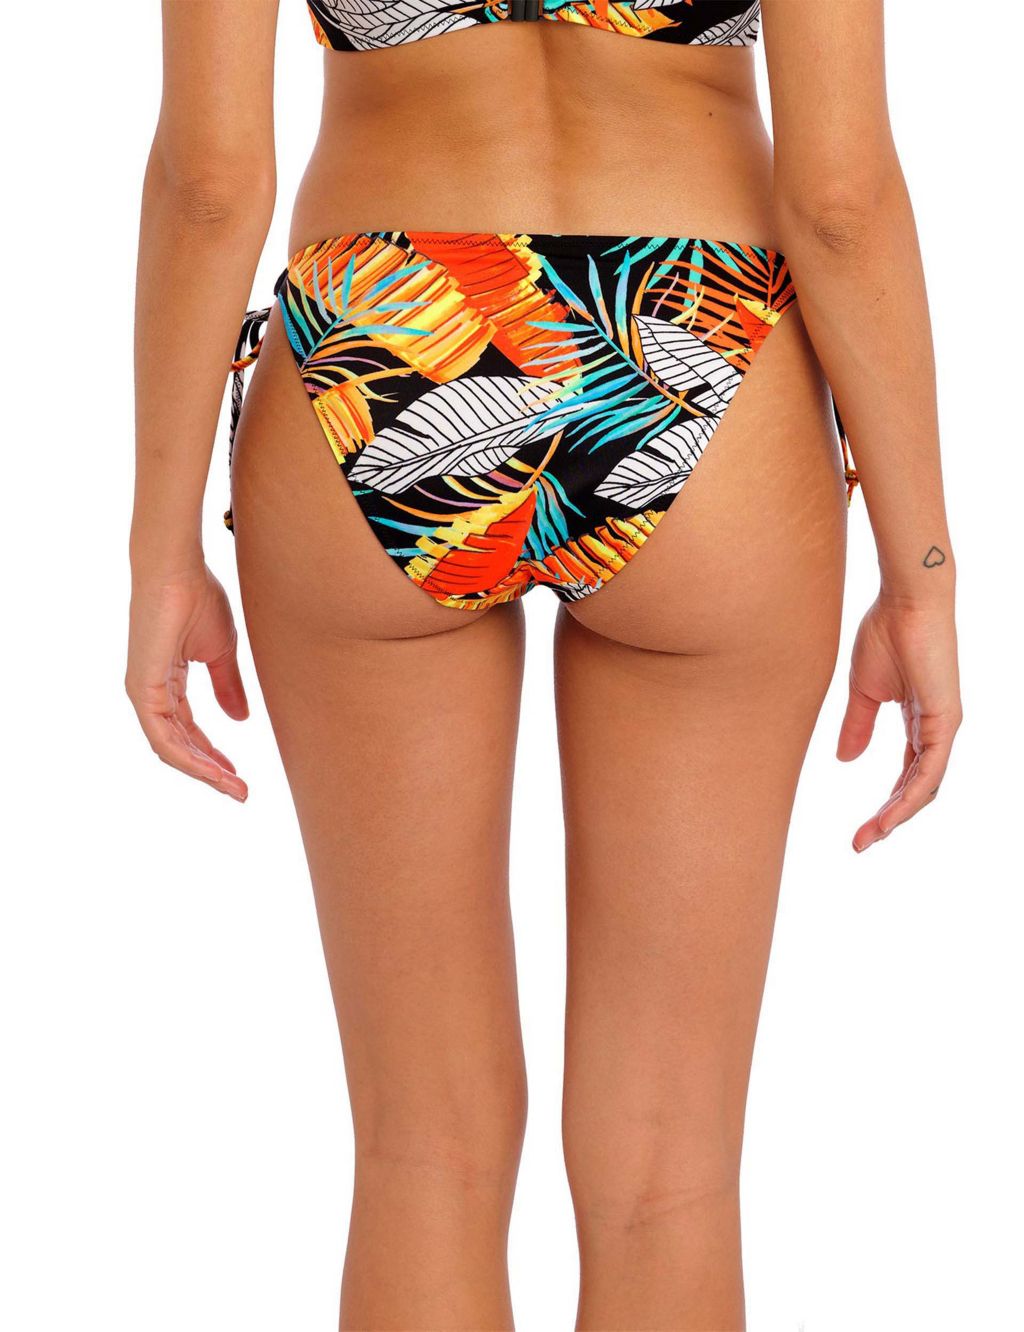 Samba Nights Printed Hipster Bikini Bottoms image 4